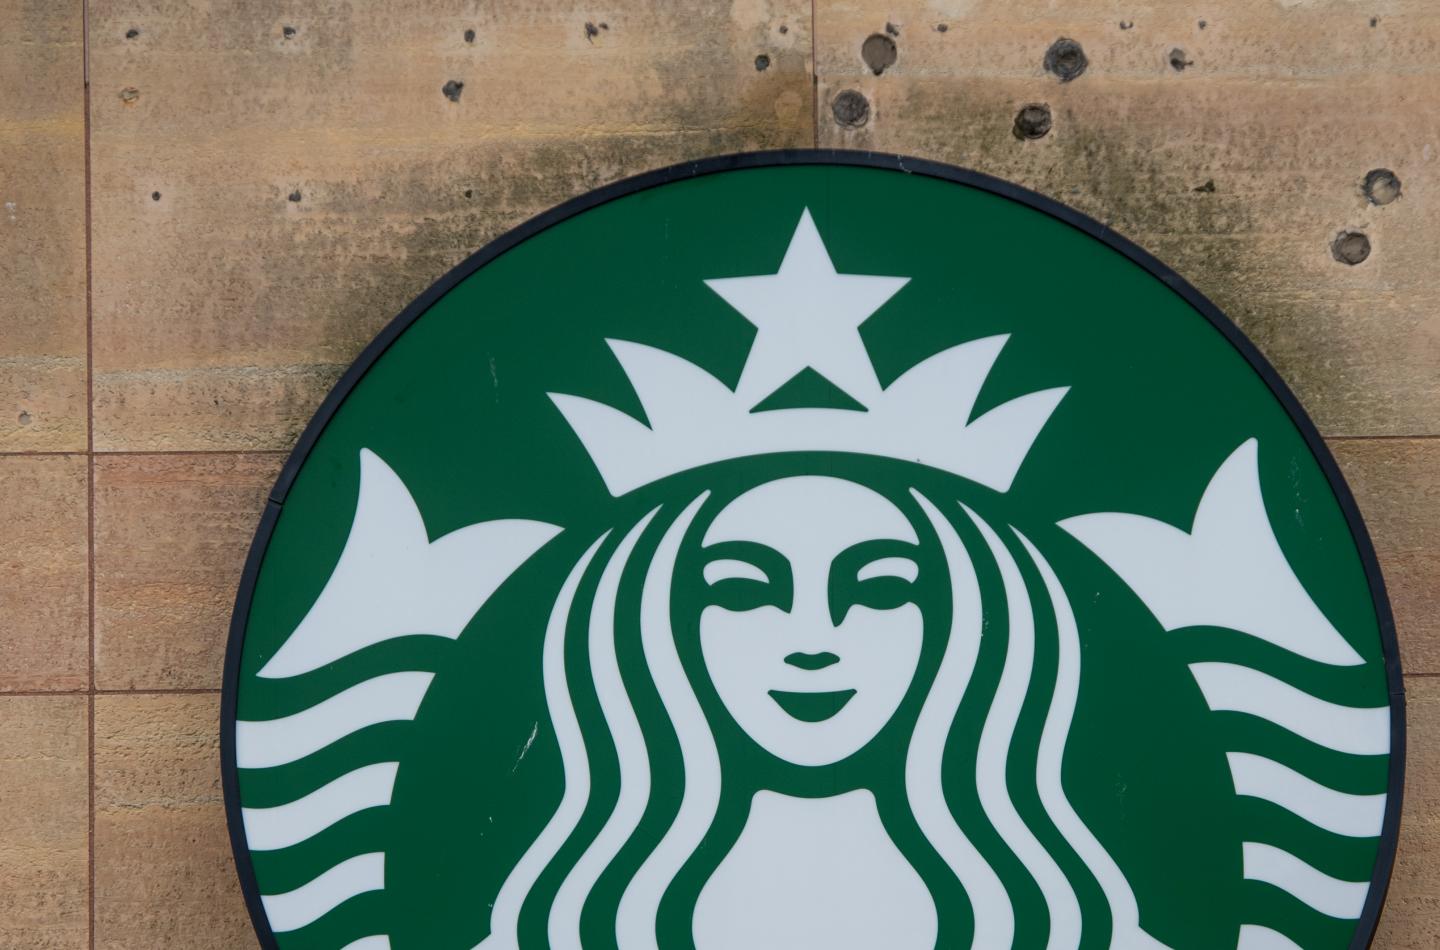 Fake Starbucks Logo - Fake Starbucks Offers of Free Coffee for Black Customers Are ...